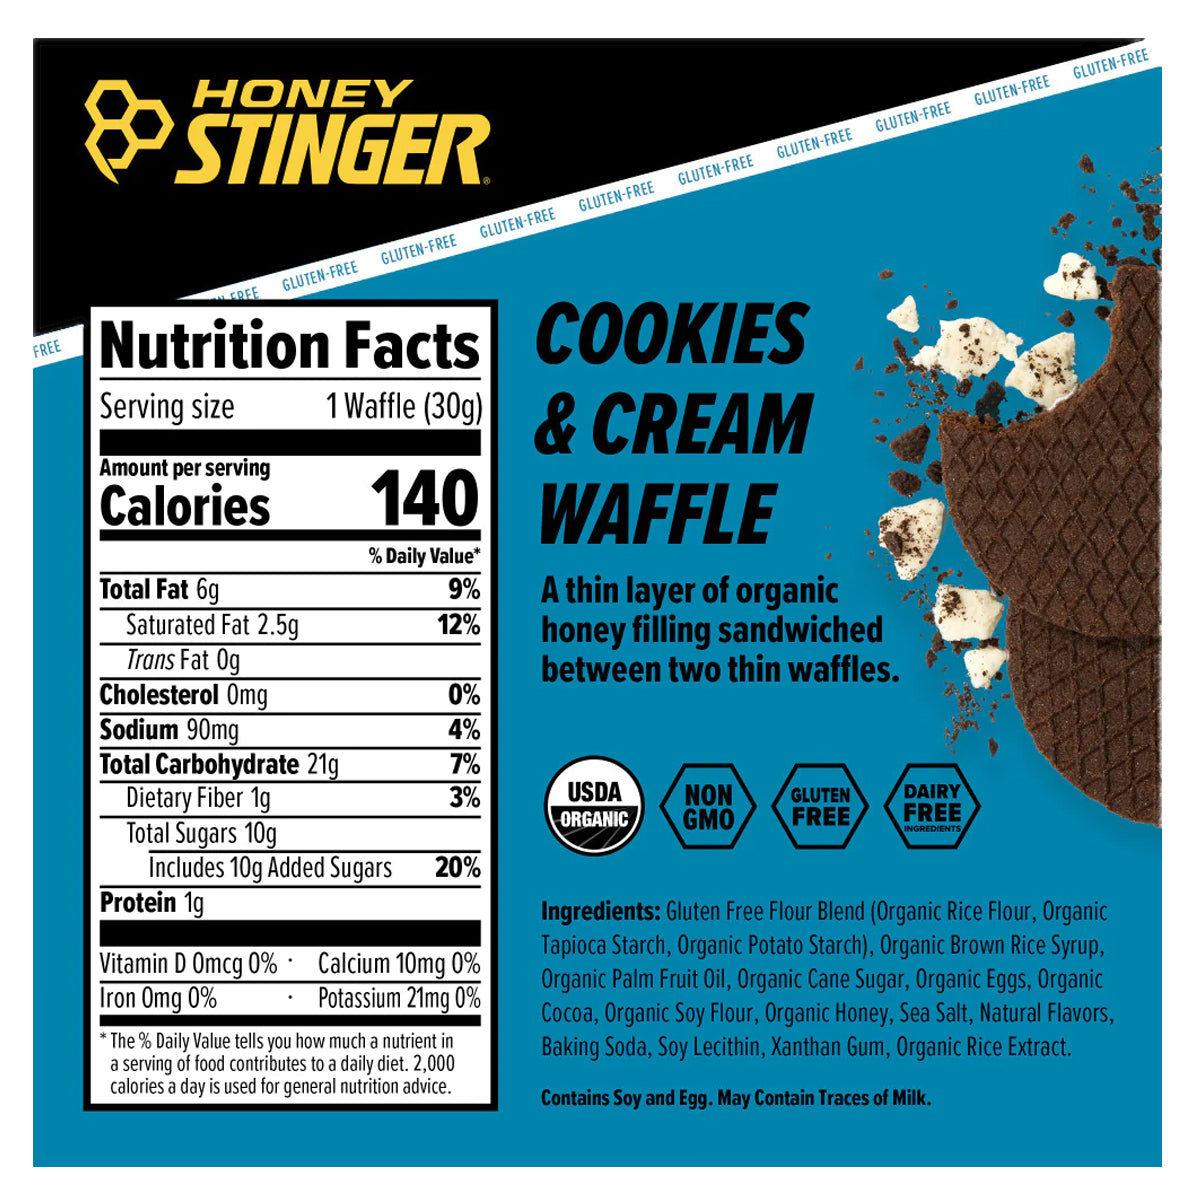 Honey Stinger Waffles in Cookies & Cream by GOHUNT | Honey Stinger - GOHUNT Shop